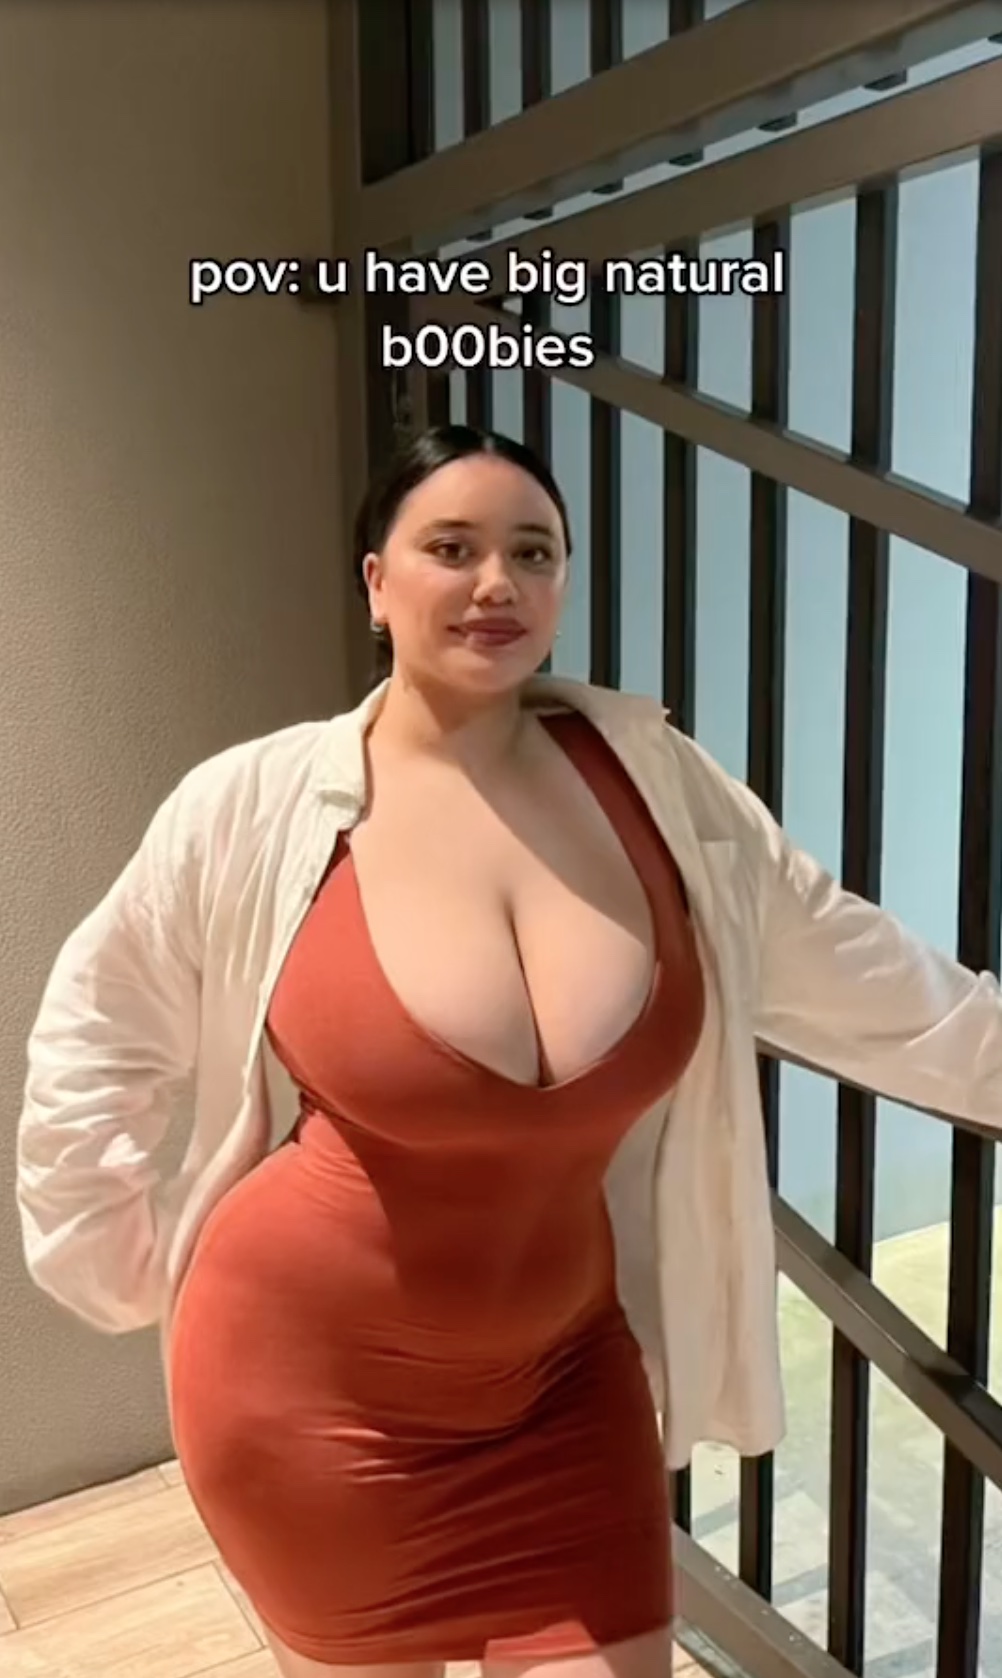 candice hanna add big natural boobs pov photo